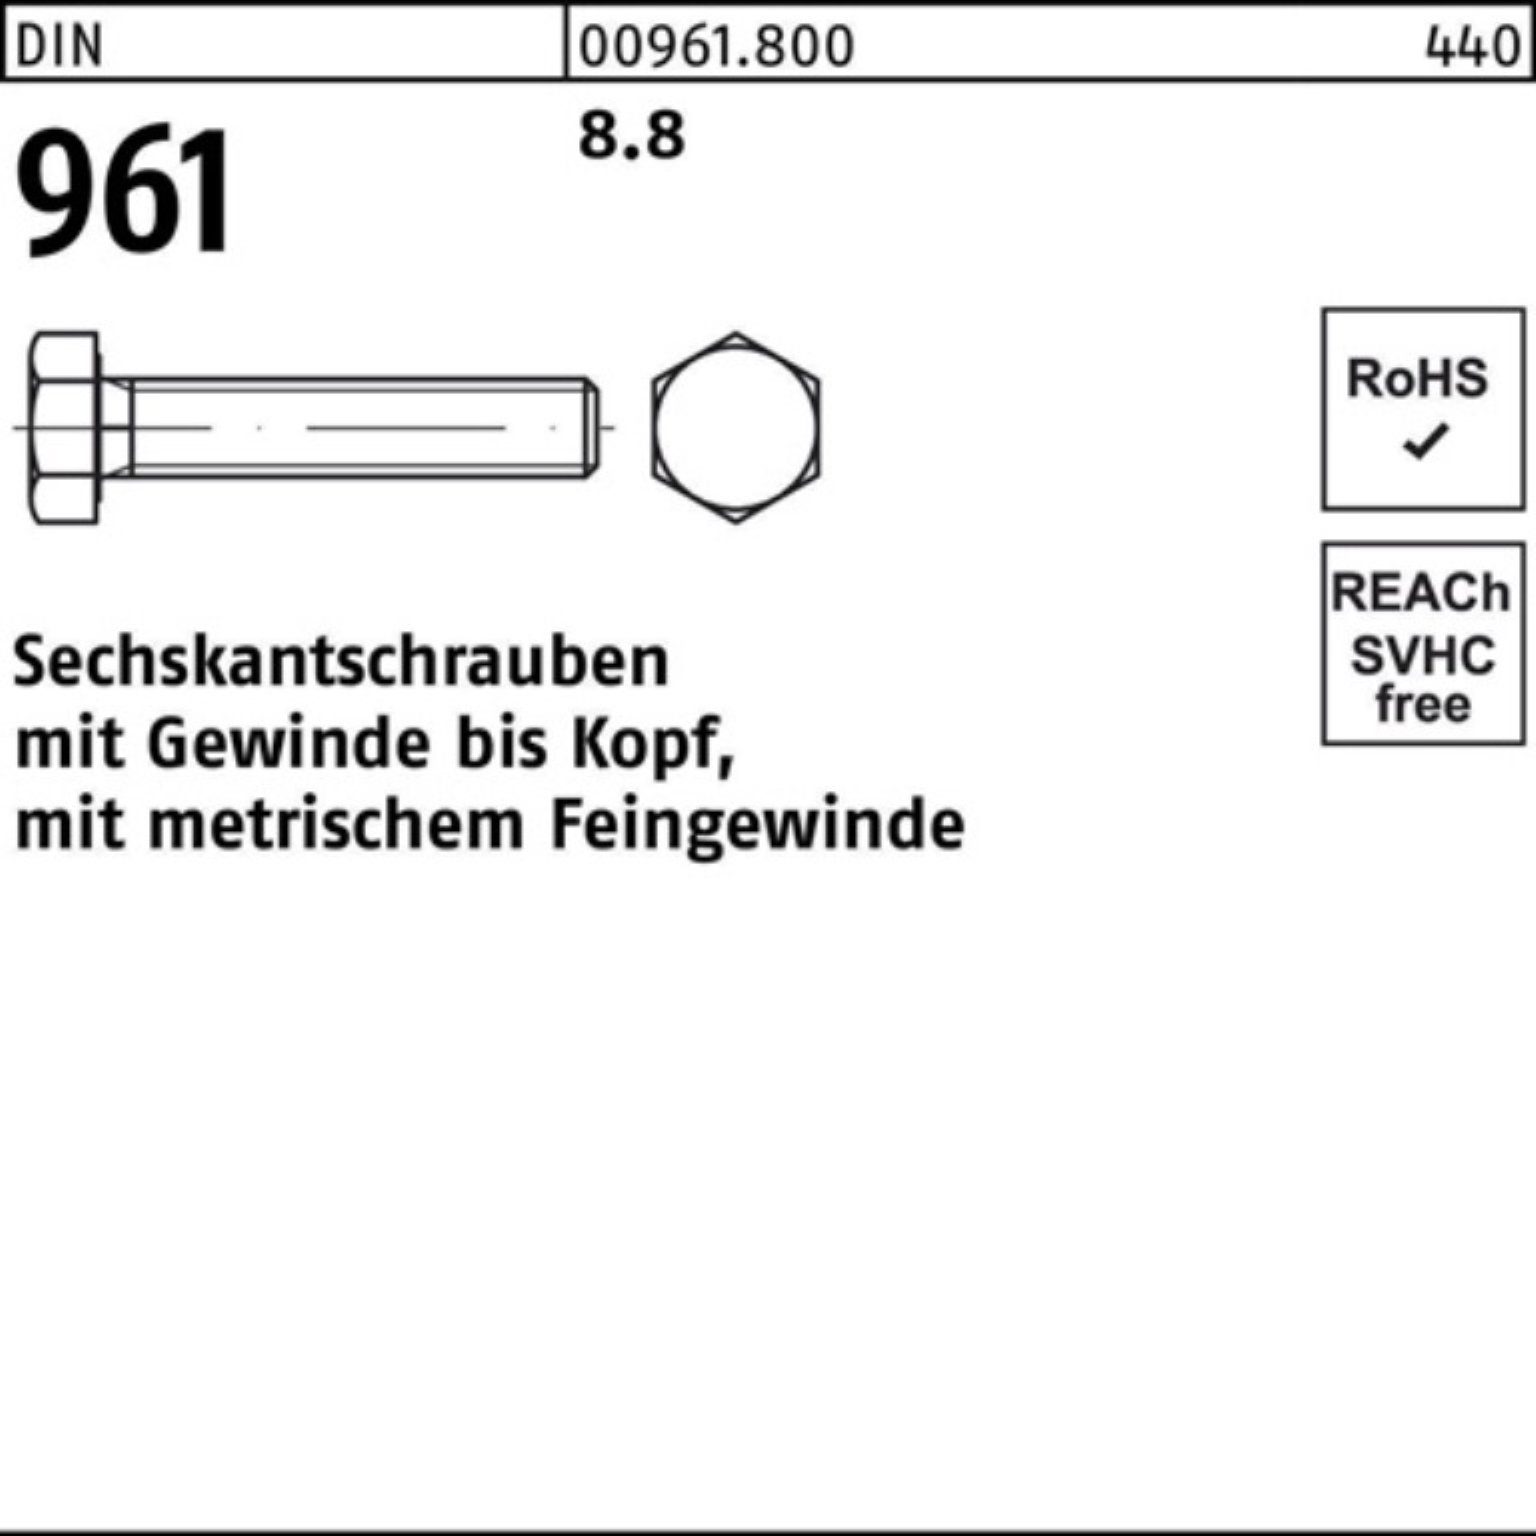 DI Pack Reyher 55 VG Sechskantschraube DIN 961 100 M10x1,25x 100er 8.8 Sechskantschraube Stück